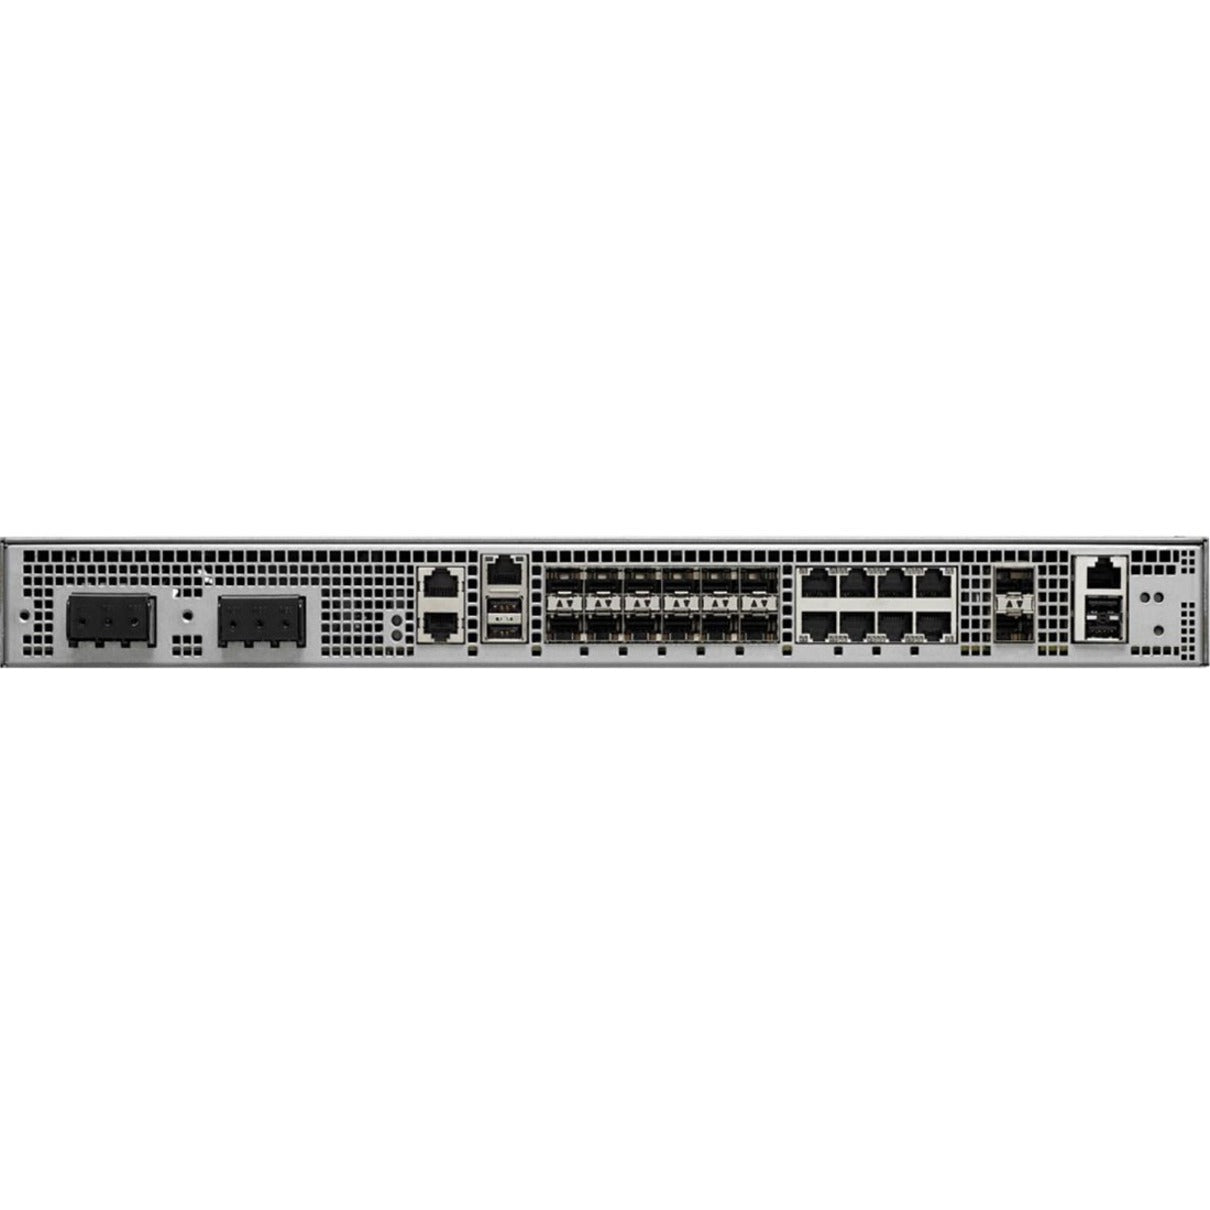 Cisco ASR-920-12CZ-A Router